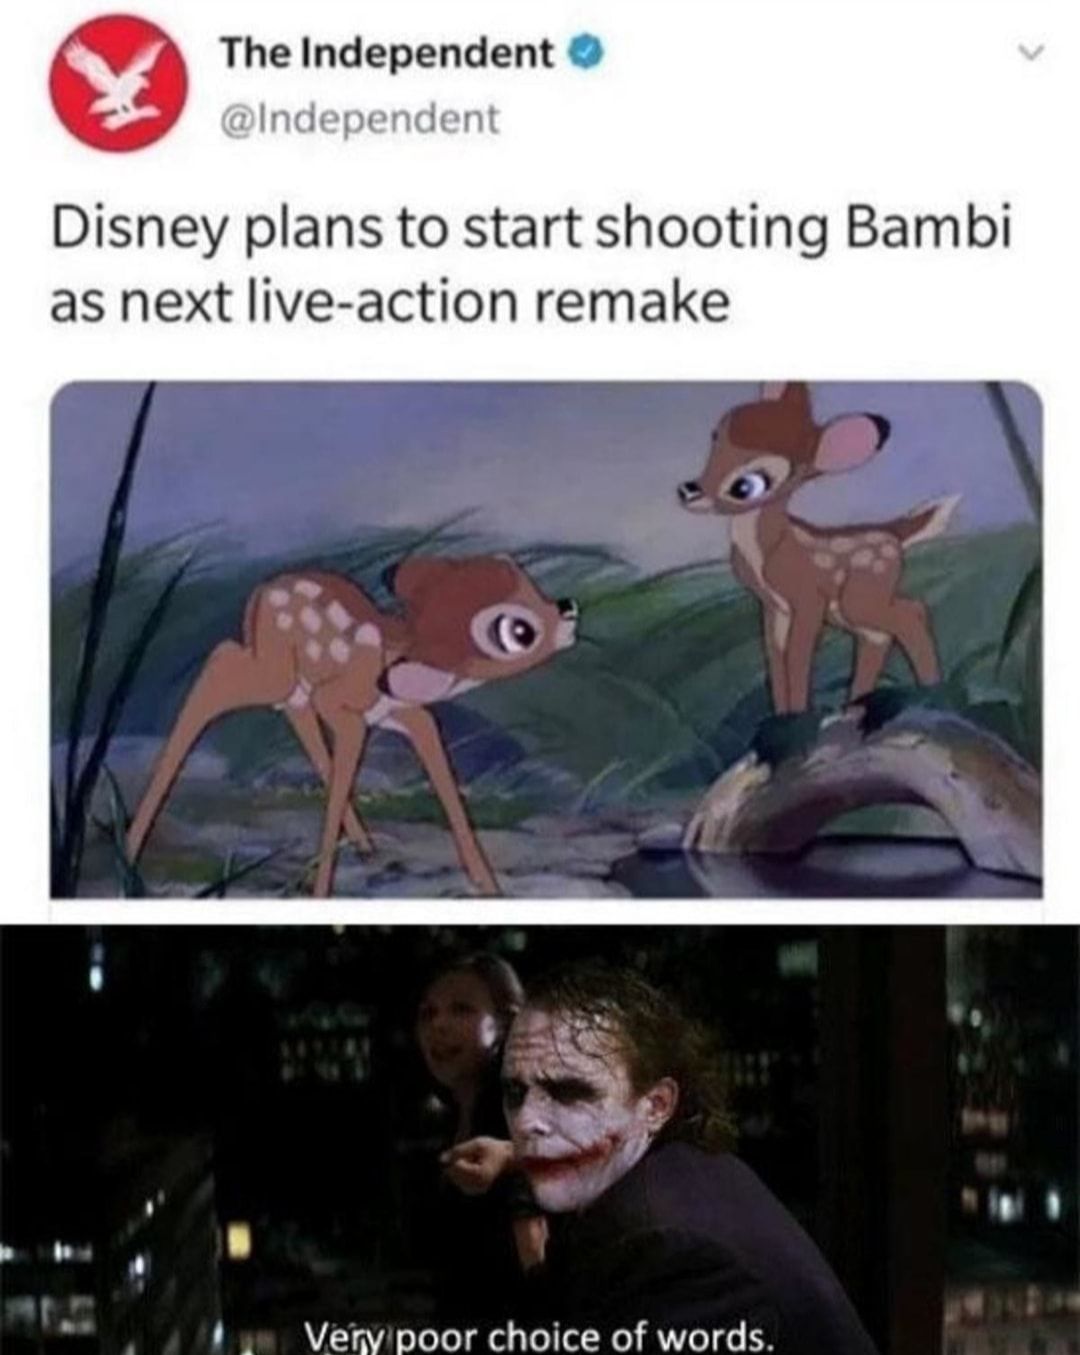 I hope Bambi's black